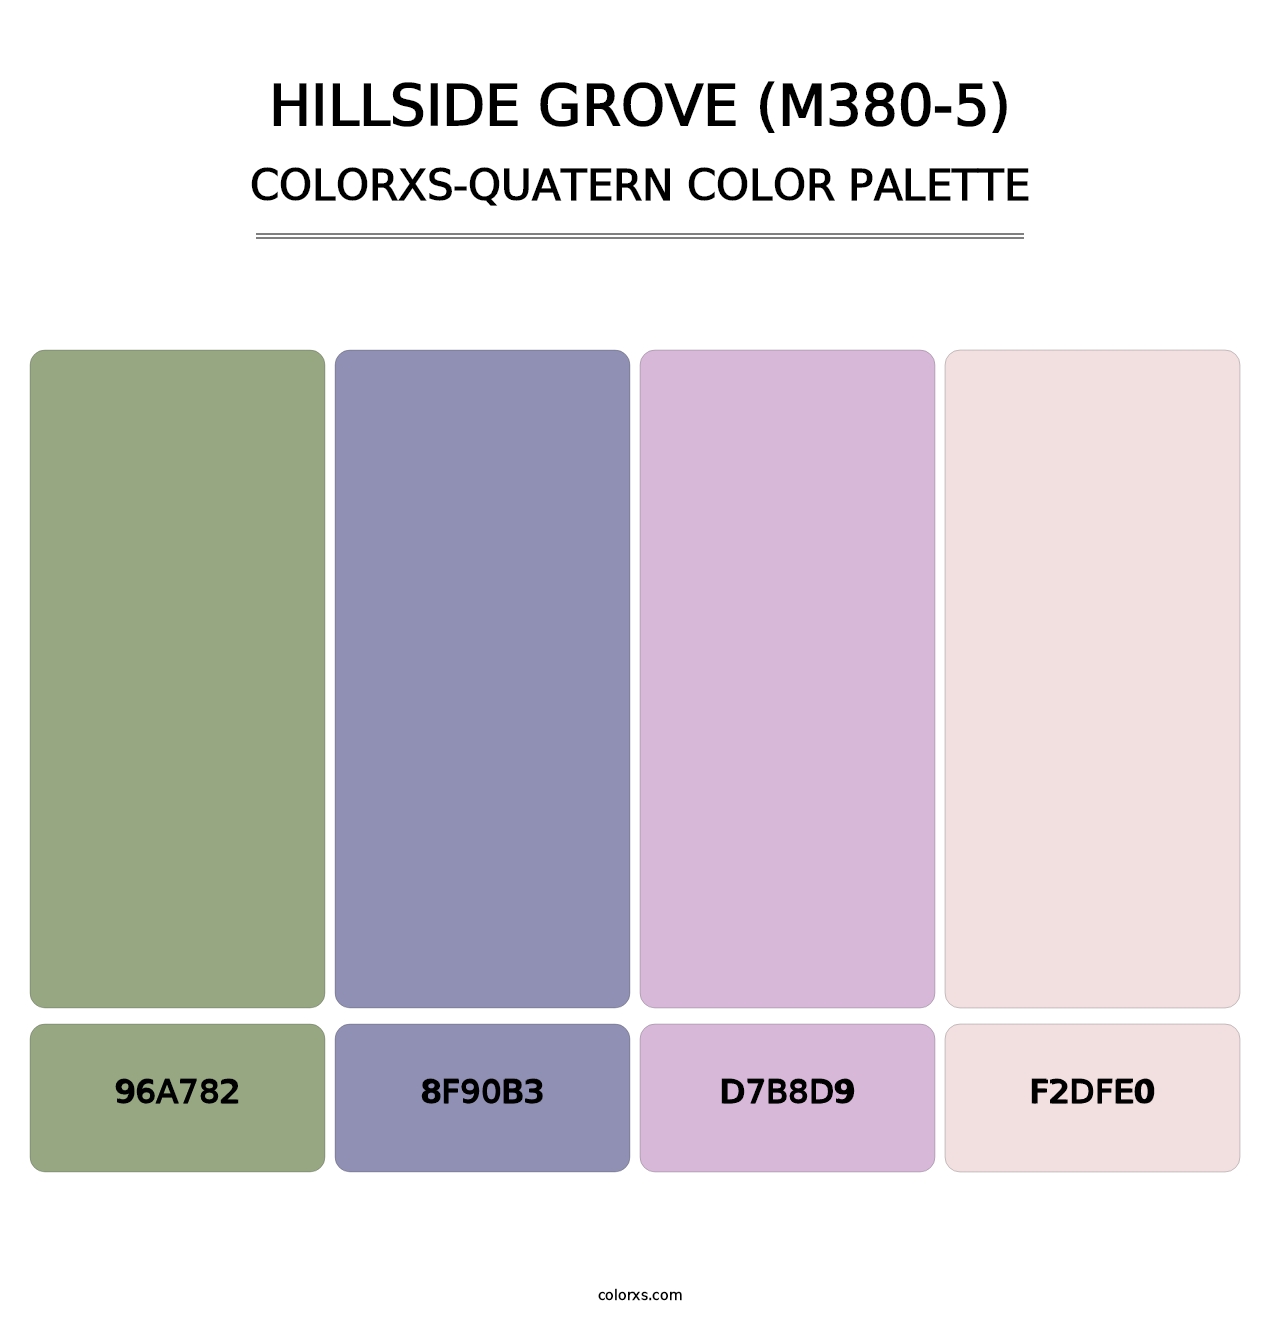 Hillside Grove (M380-5) - Colorxs Quatern Palette